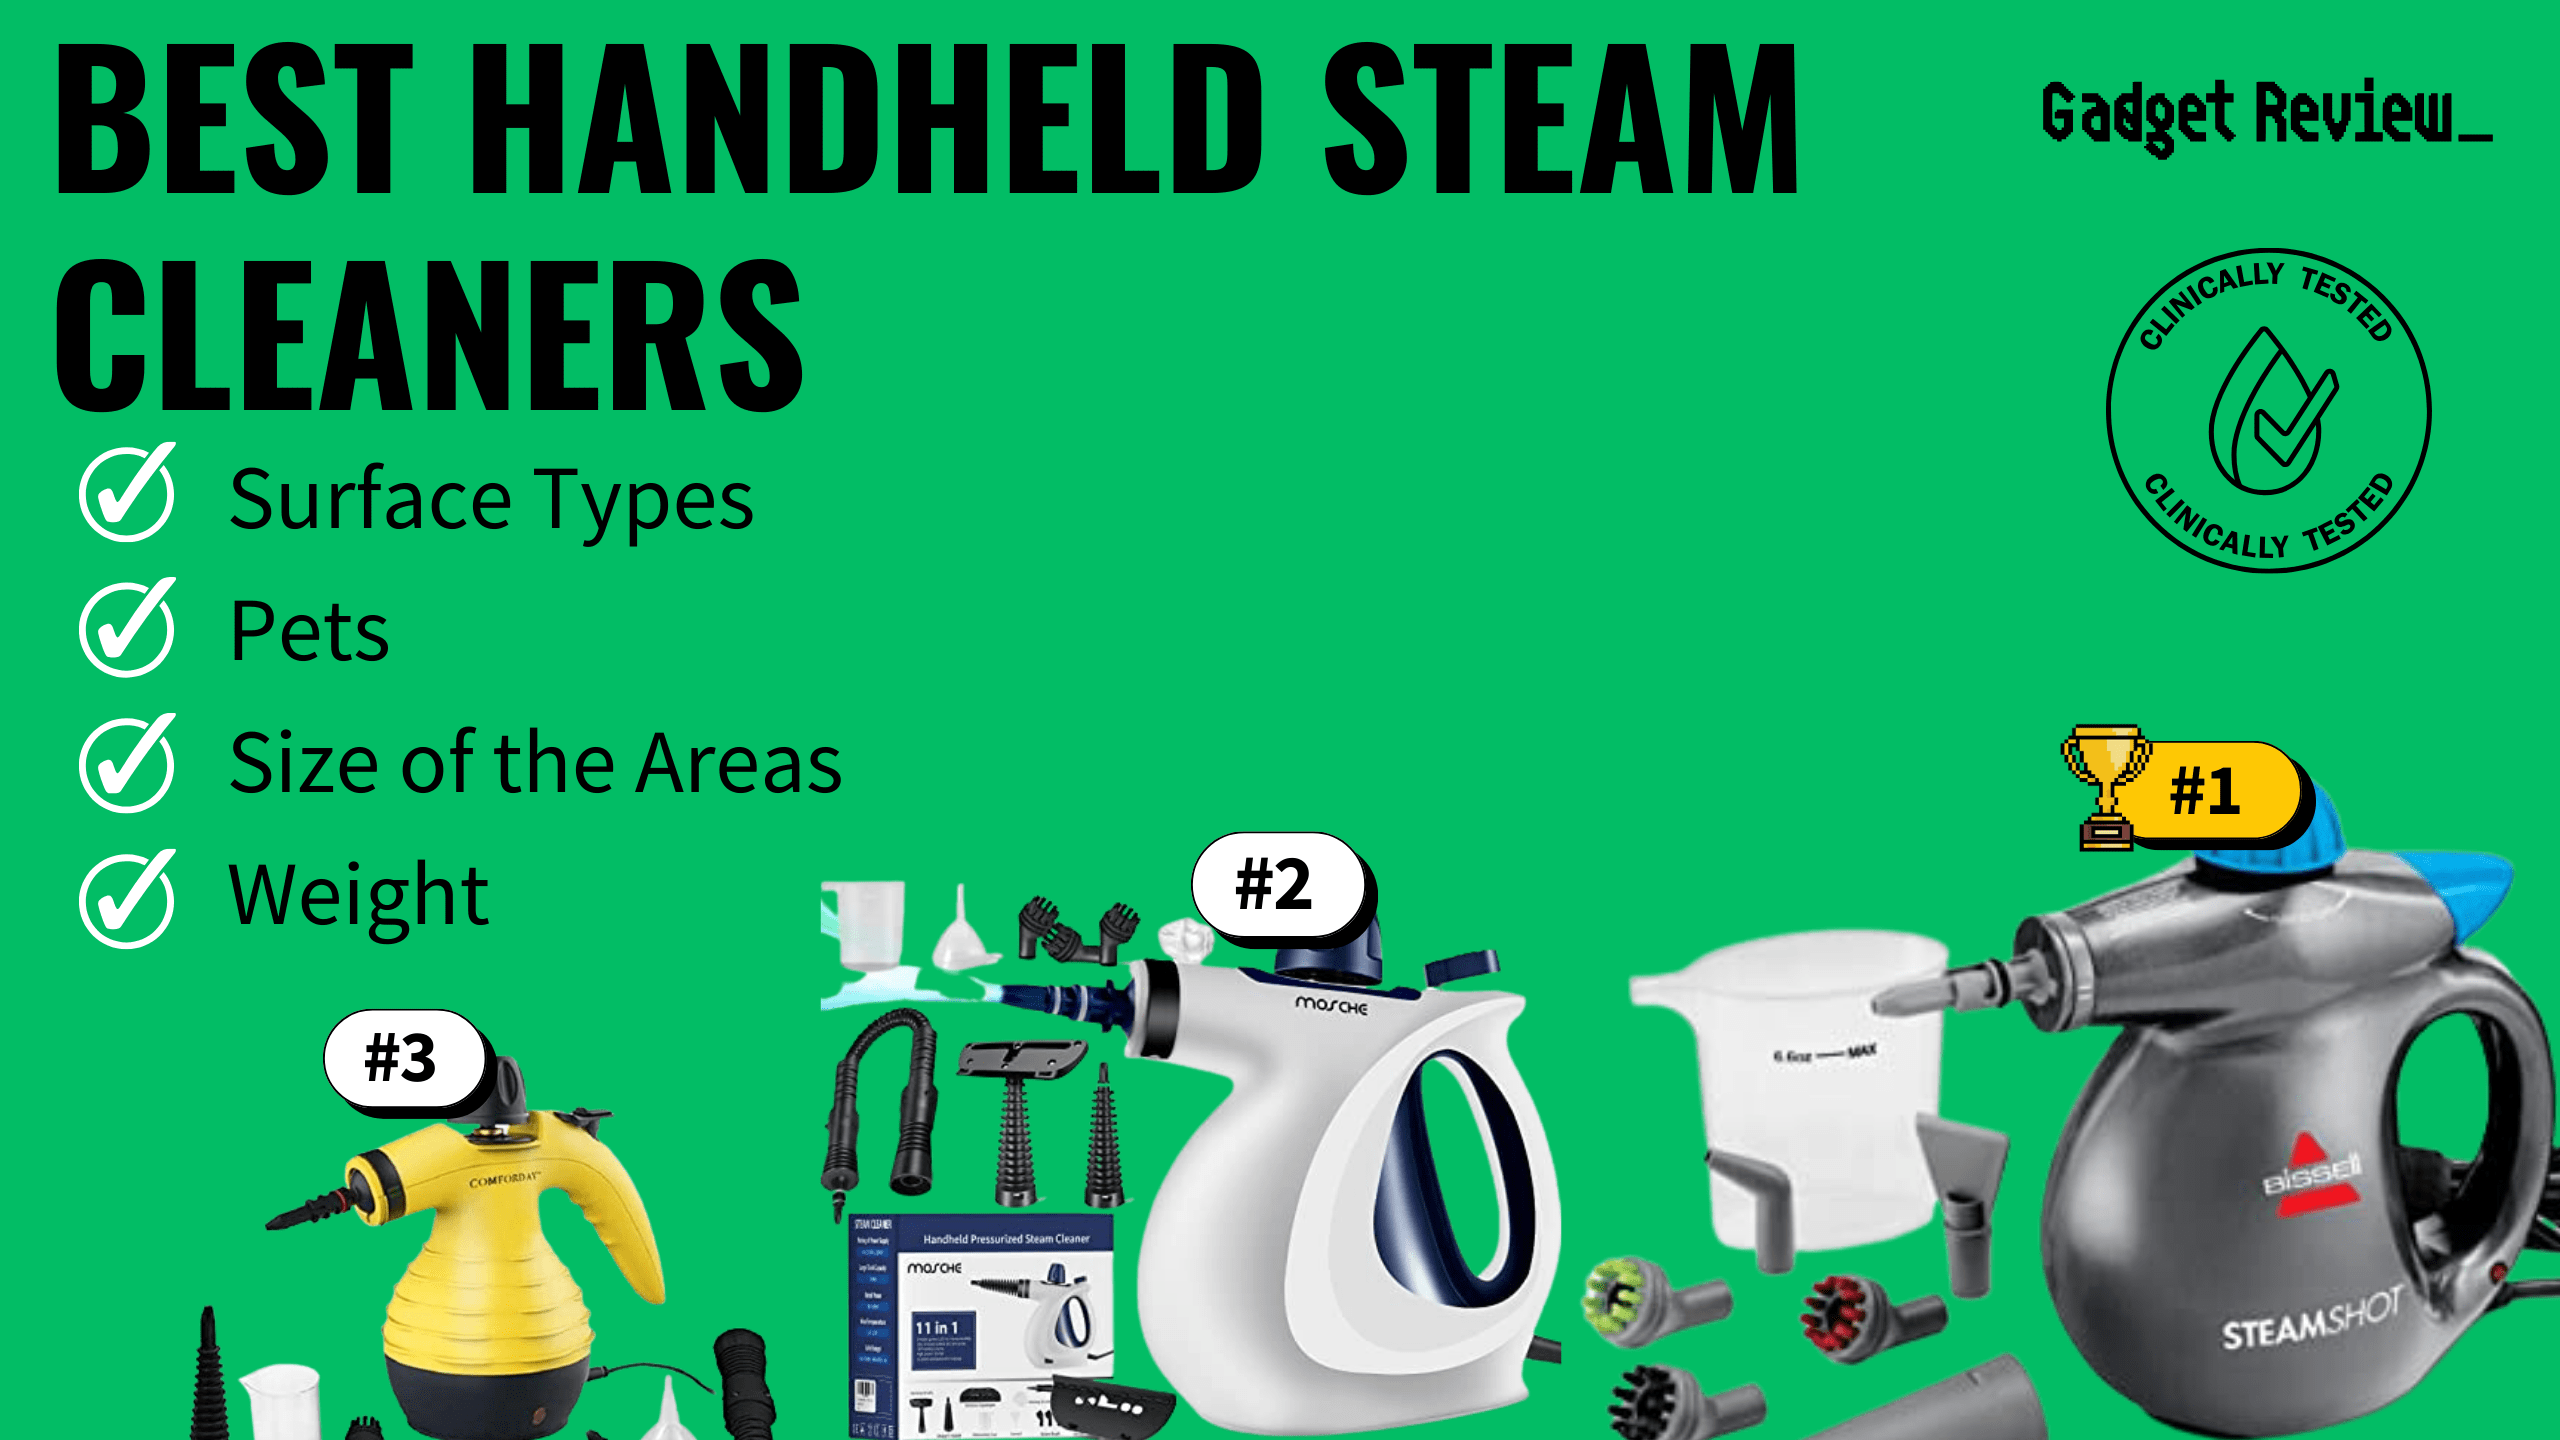 Best Handheld Steam Cleaners